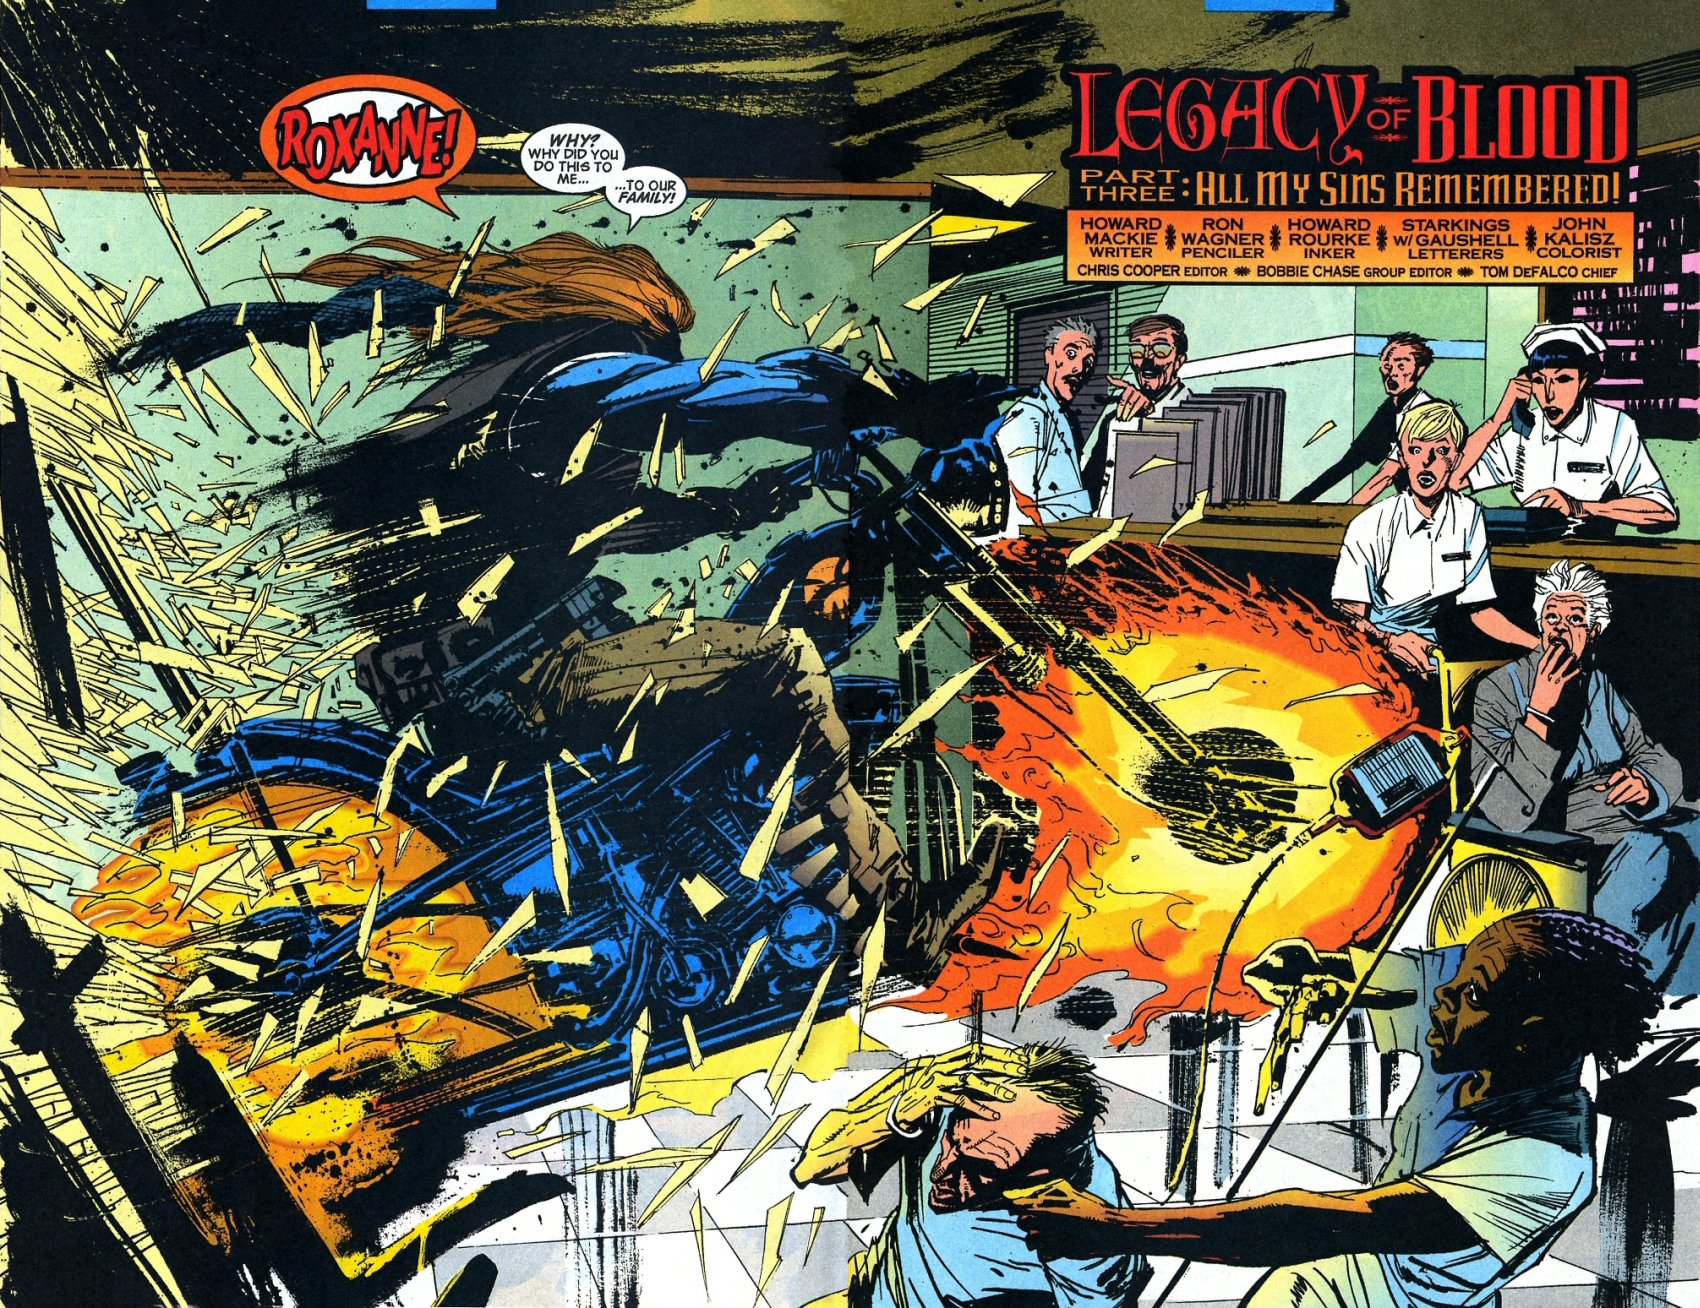 Read online Blaze: Legacy of Blood comic -  Issue #3 - 3